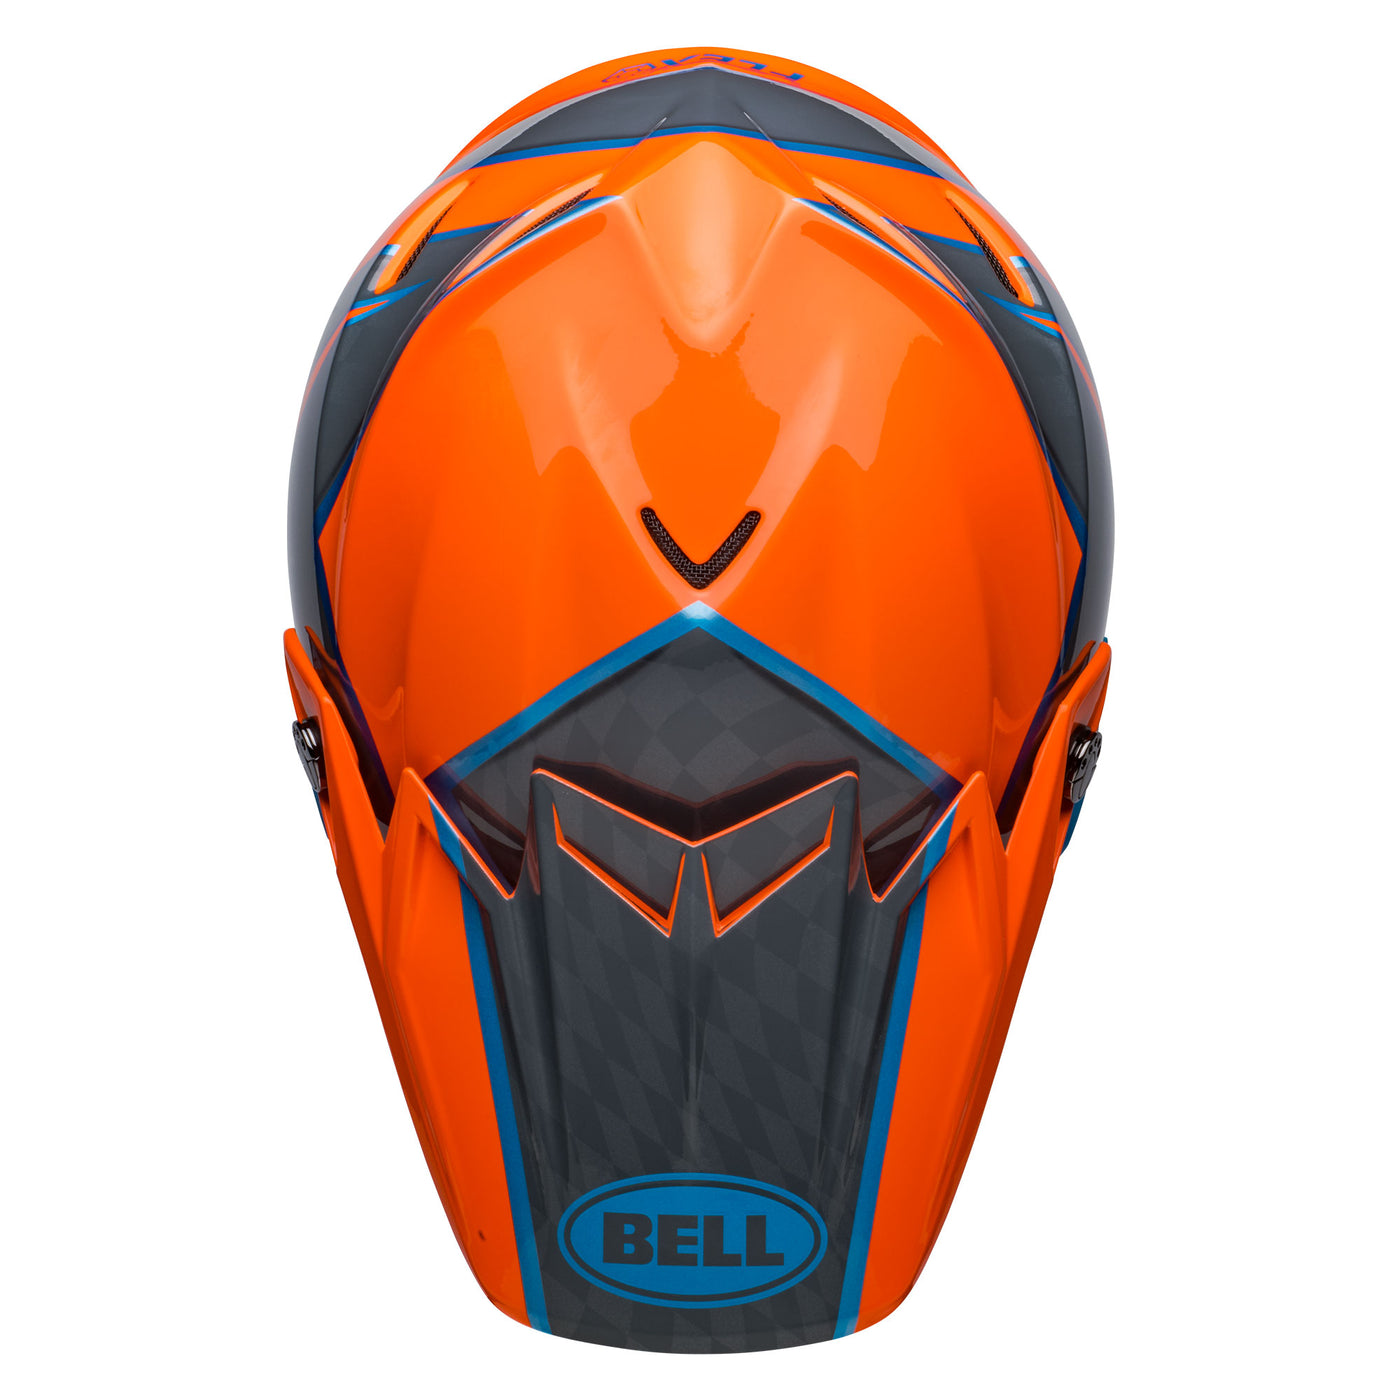 bell moto 9s flex dirt motorcycle helmet sprite gloss orange gray top